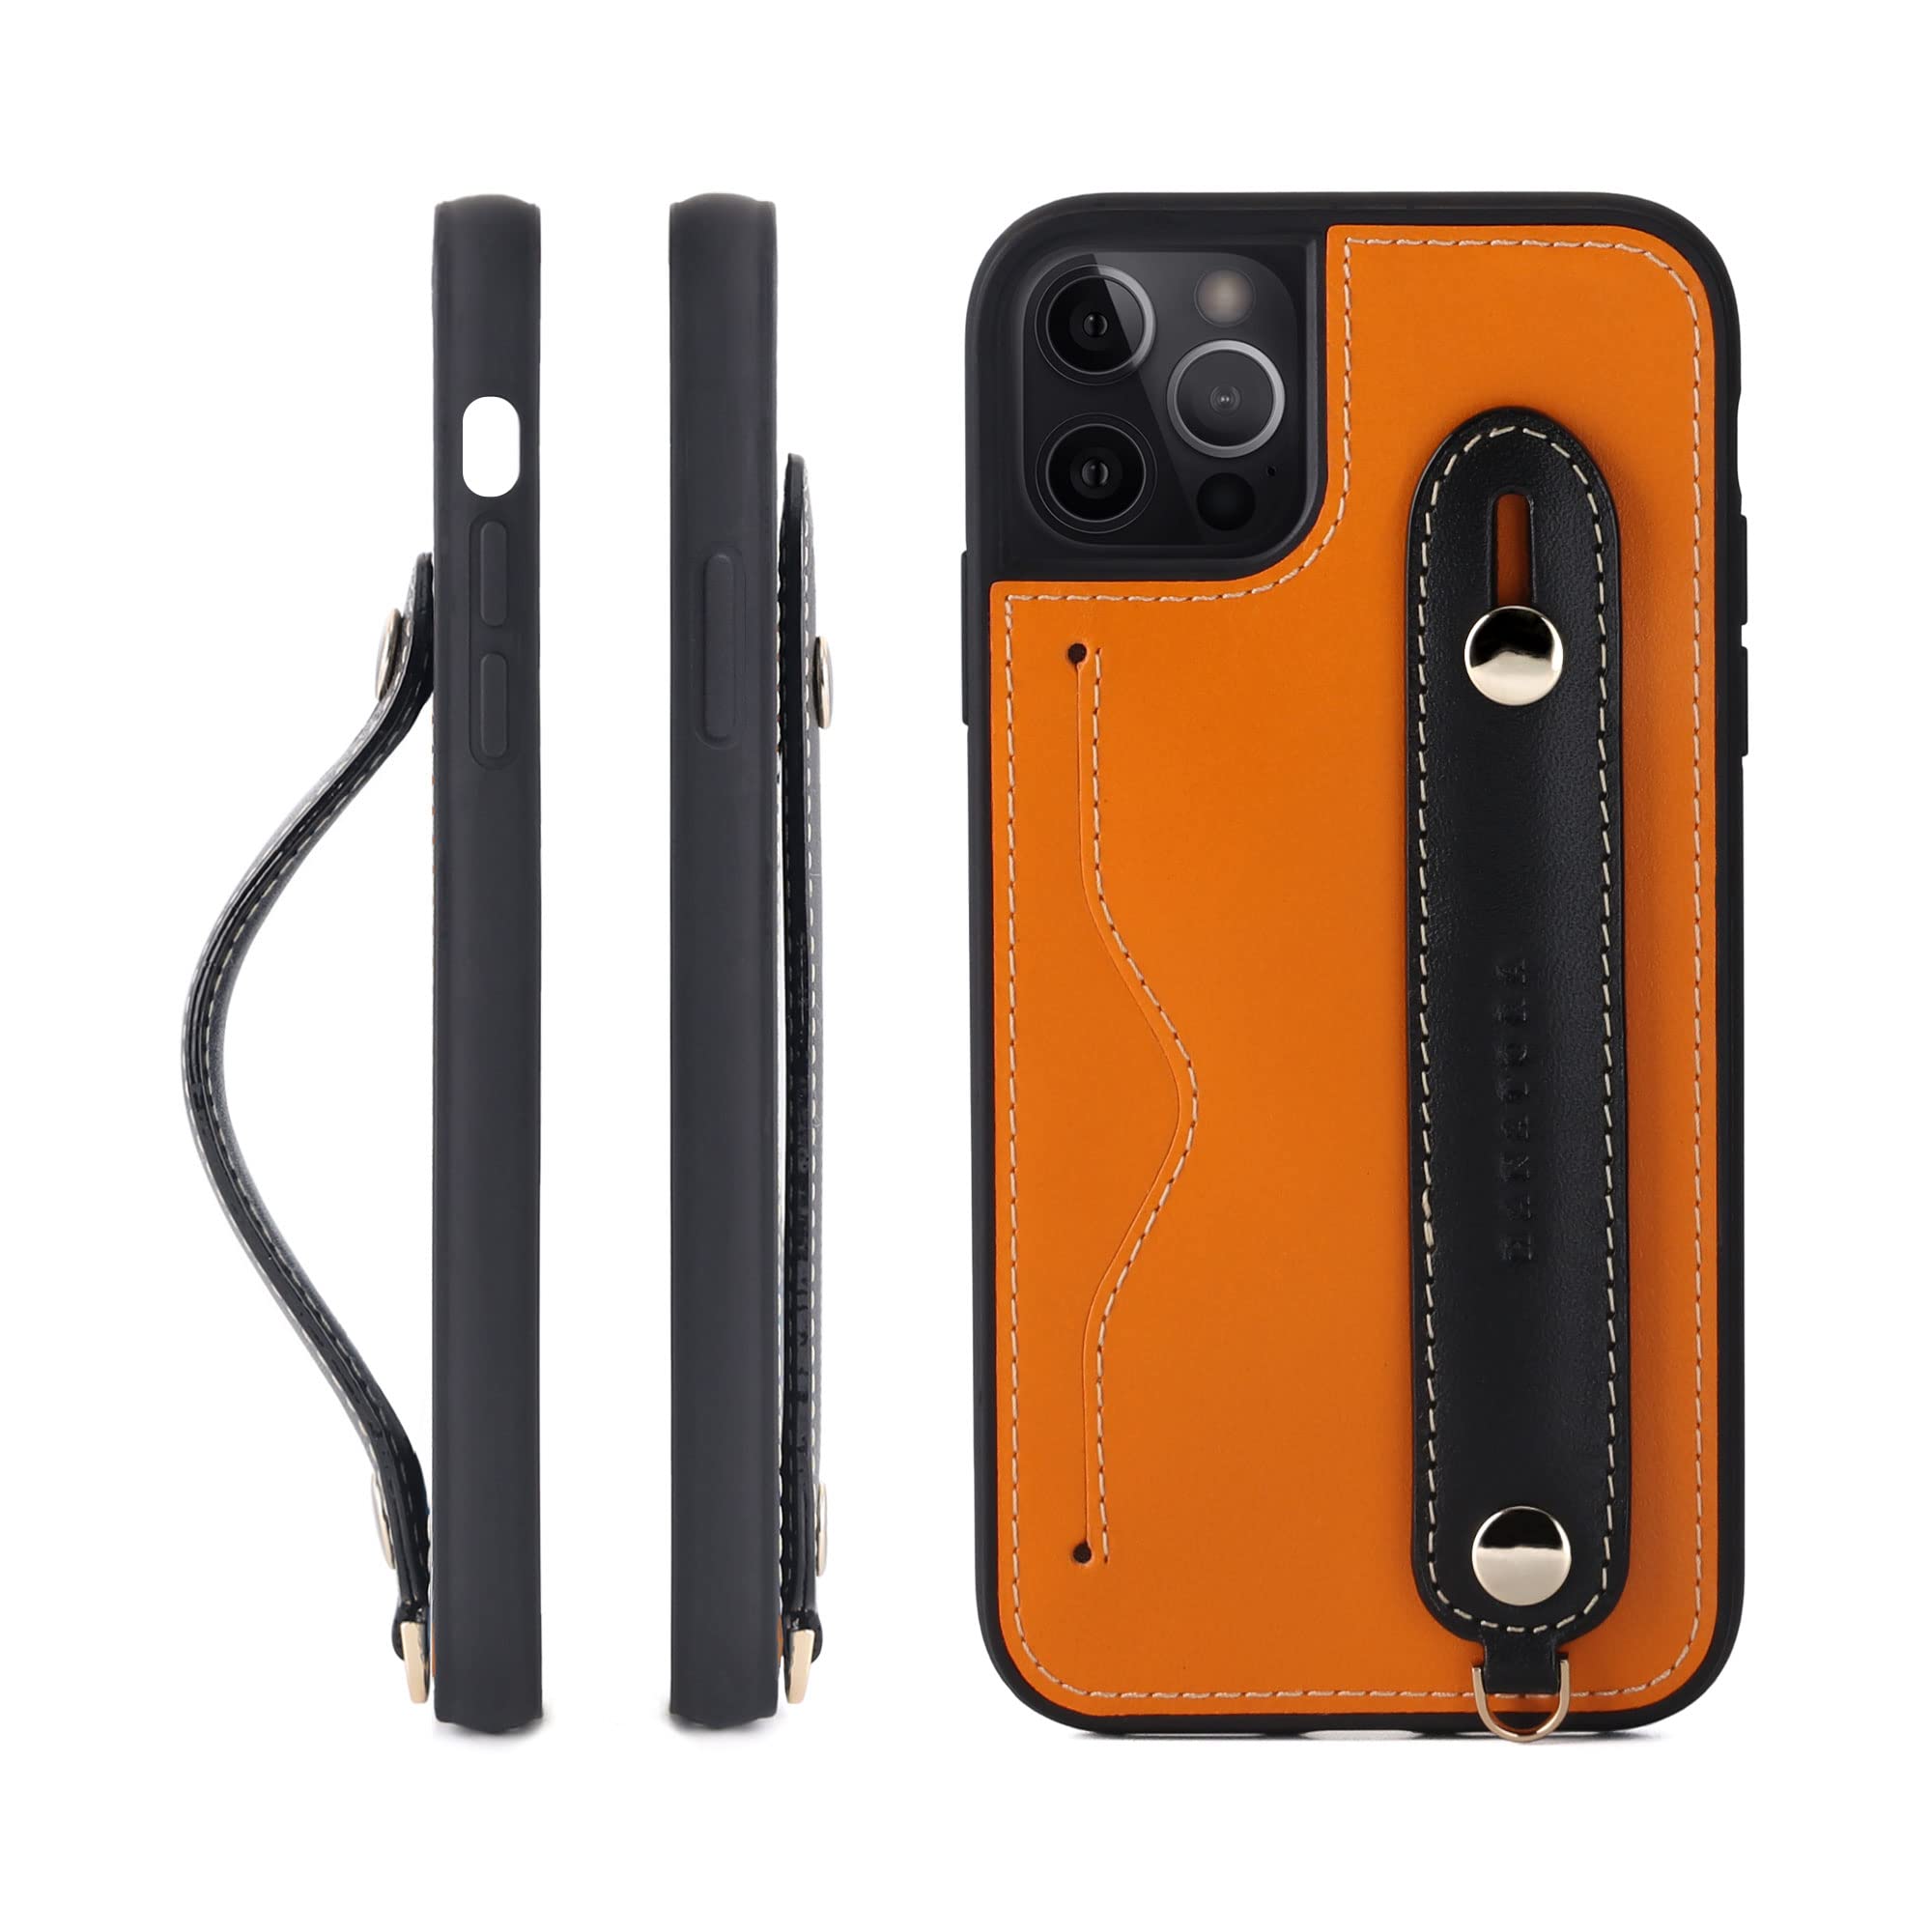 [HANATORA] iPhone13 Pro ケース 本革 グリップケース レザー ストラップ付属 イタリア製牛革 ヌメ革 片手操作 カード収納 スタンド機能 メンズ レディース オレンジ/ブラック CGH-13Pro-Orange-BK